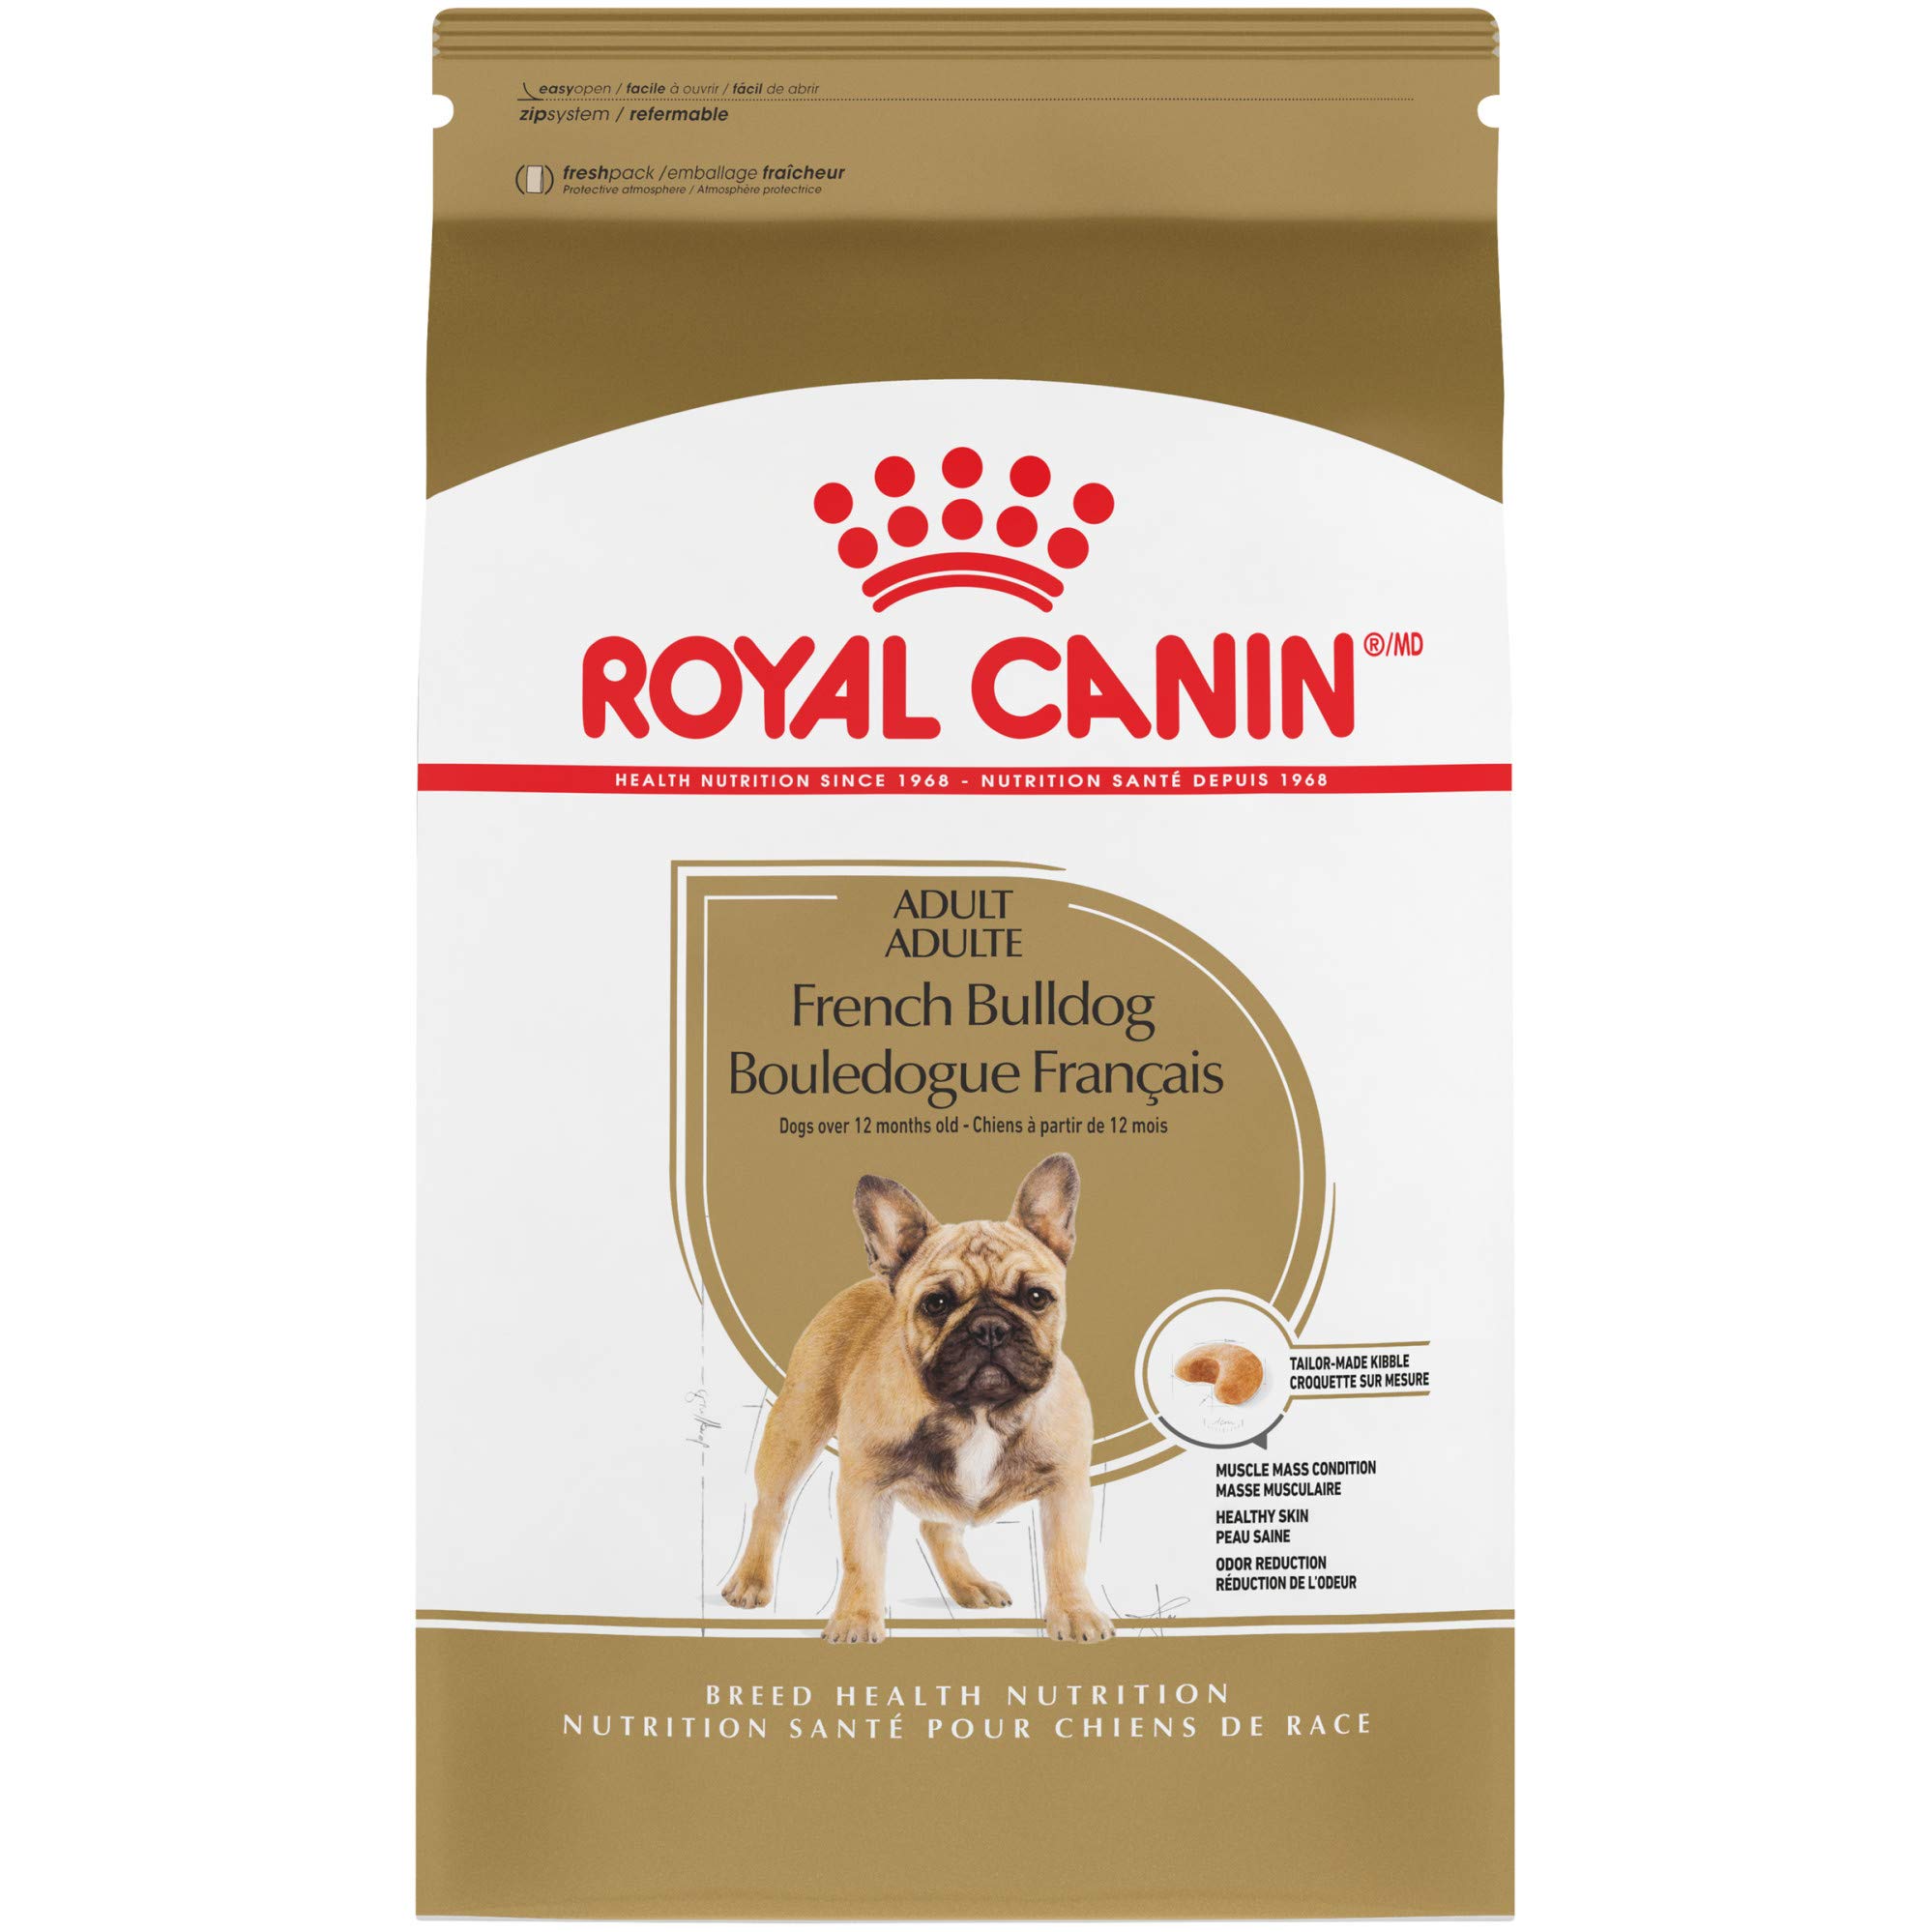 Royal Canin 品種の健康栄養フレンチ ブルドッグ成犬ドライ ドッグ フード